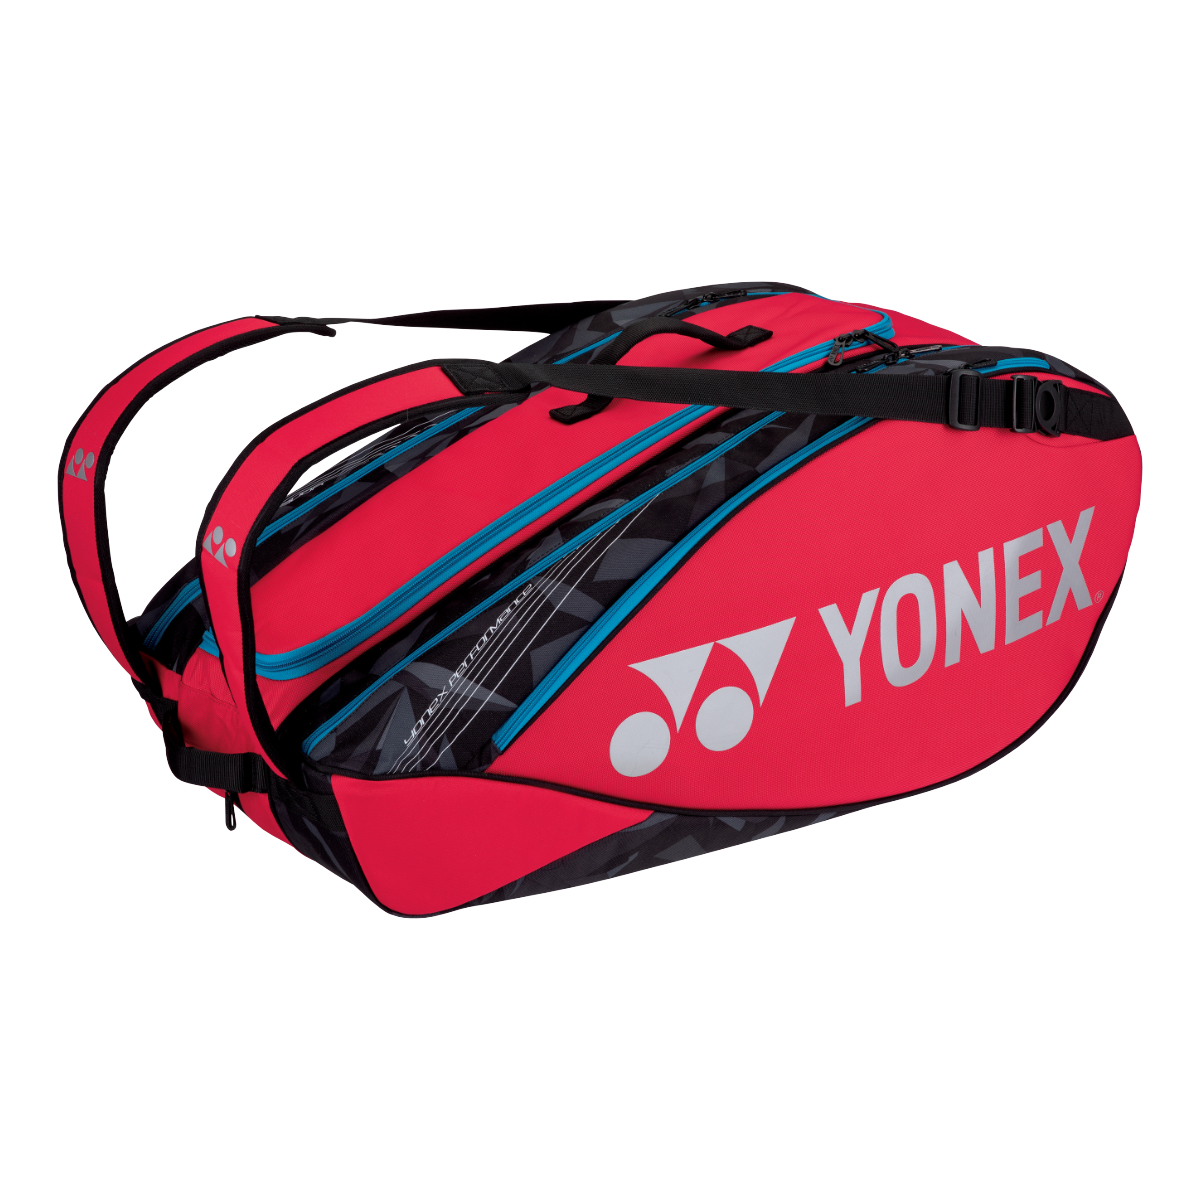 Yonex Pro Line Tennistasche 9er Tango red